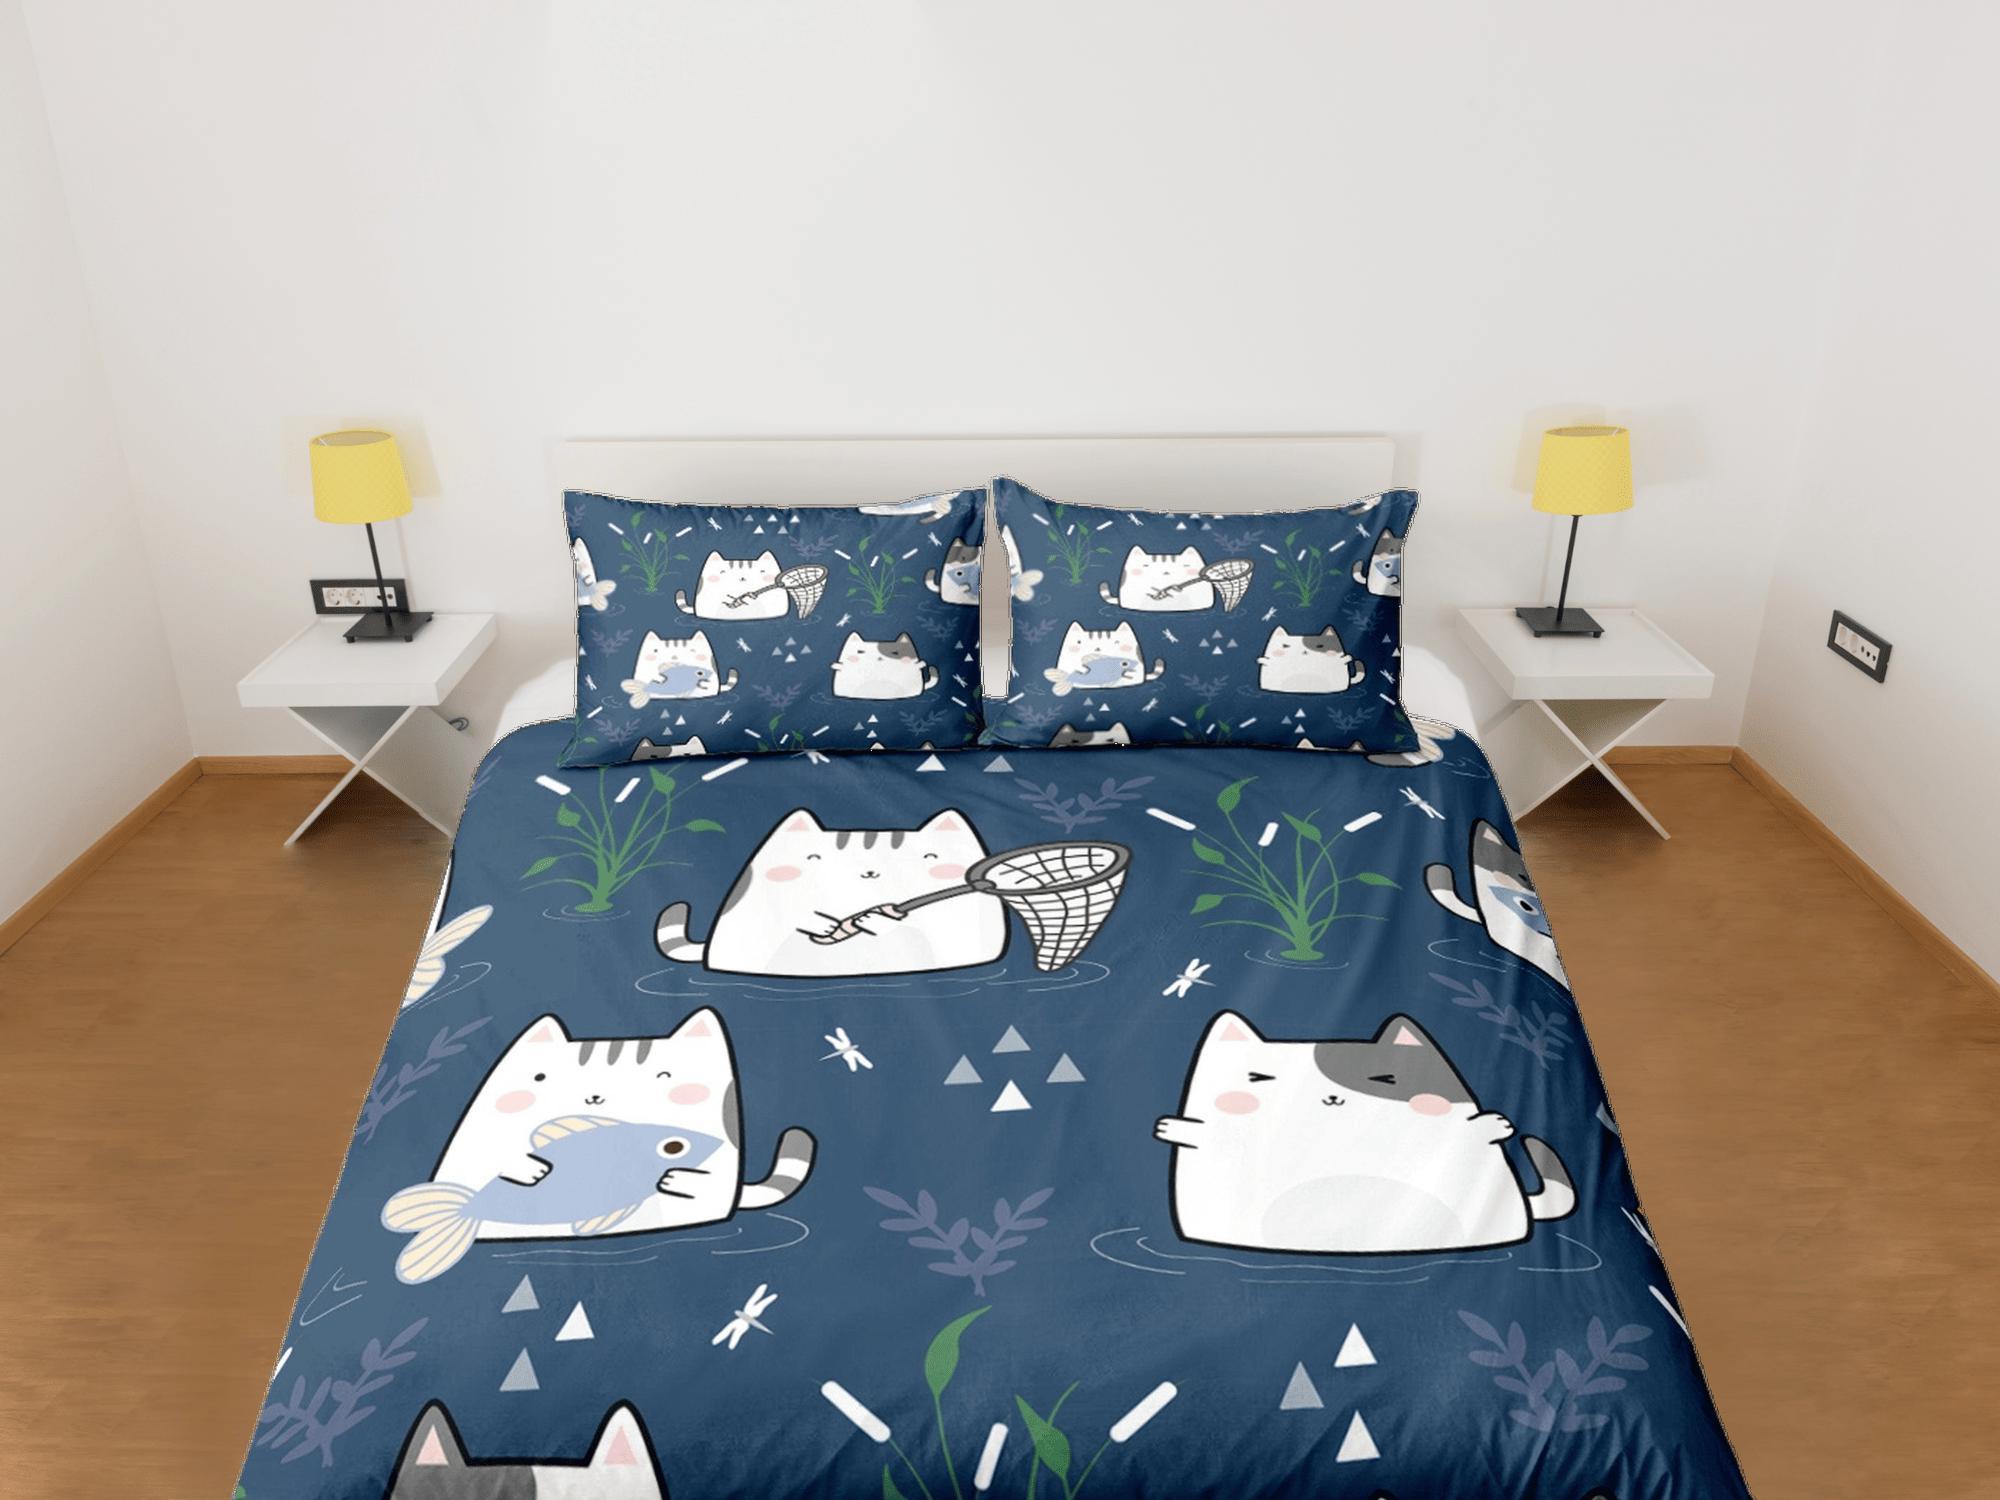 daintyduvet Cat Lover Duvet Cover Bedspread, Cute Cartoons Cat Bedding for Teens Kids Bedroom Comforter Cover